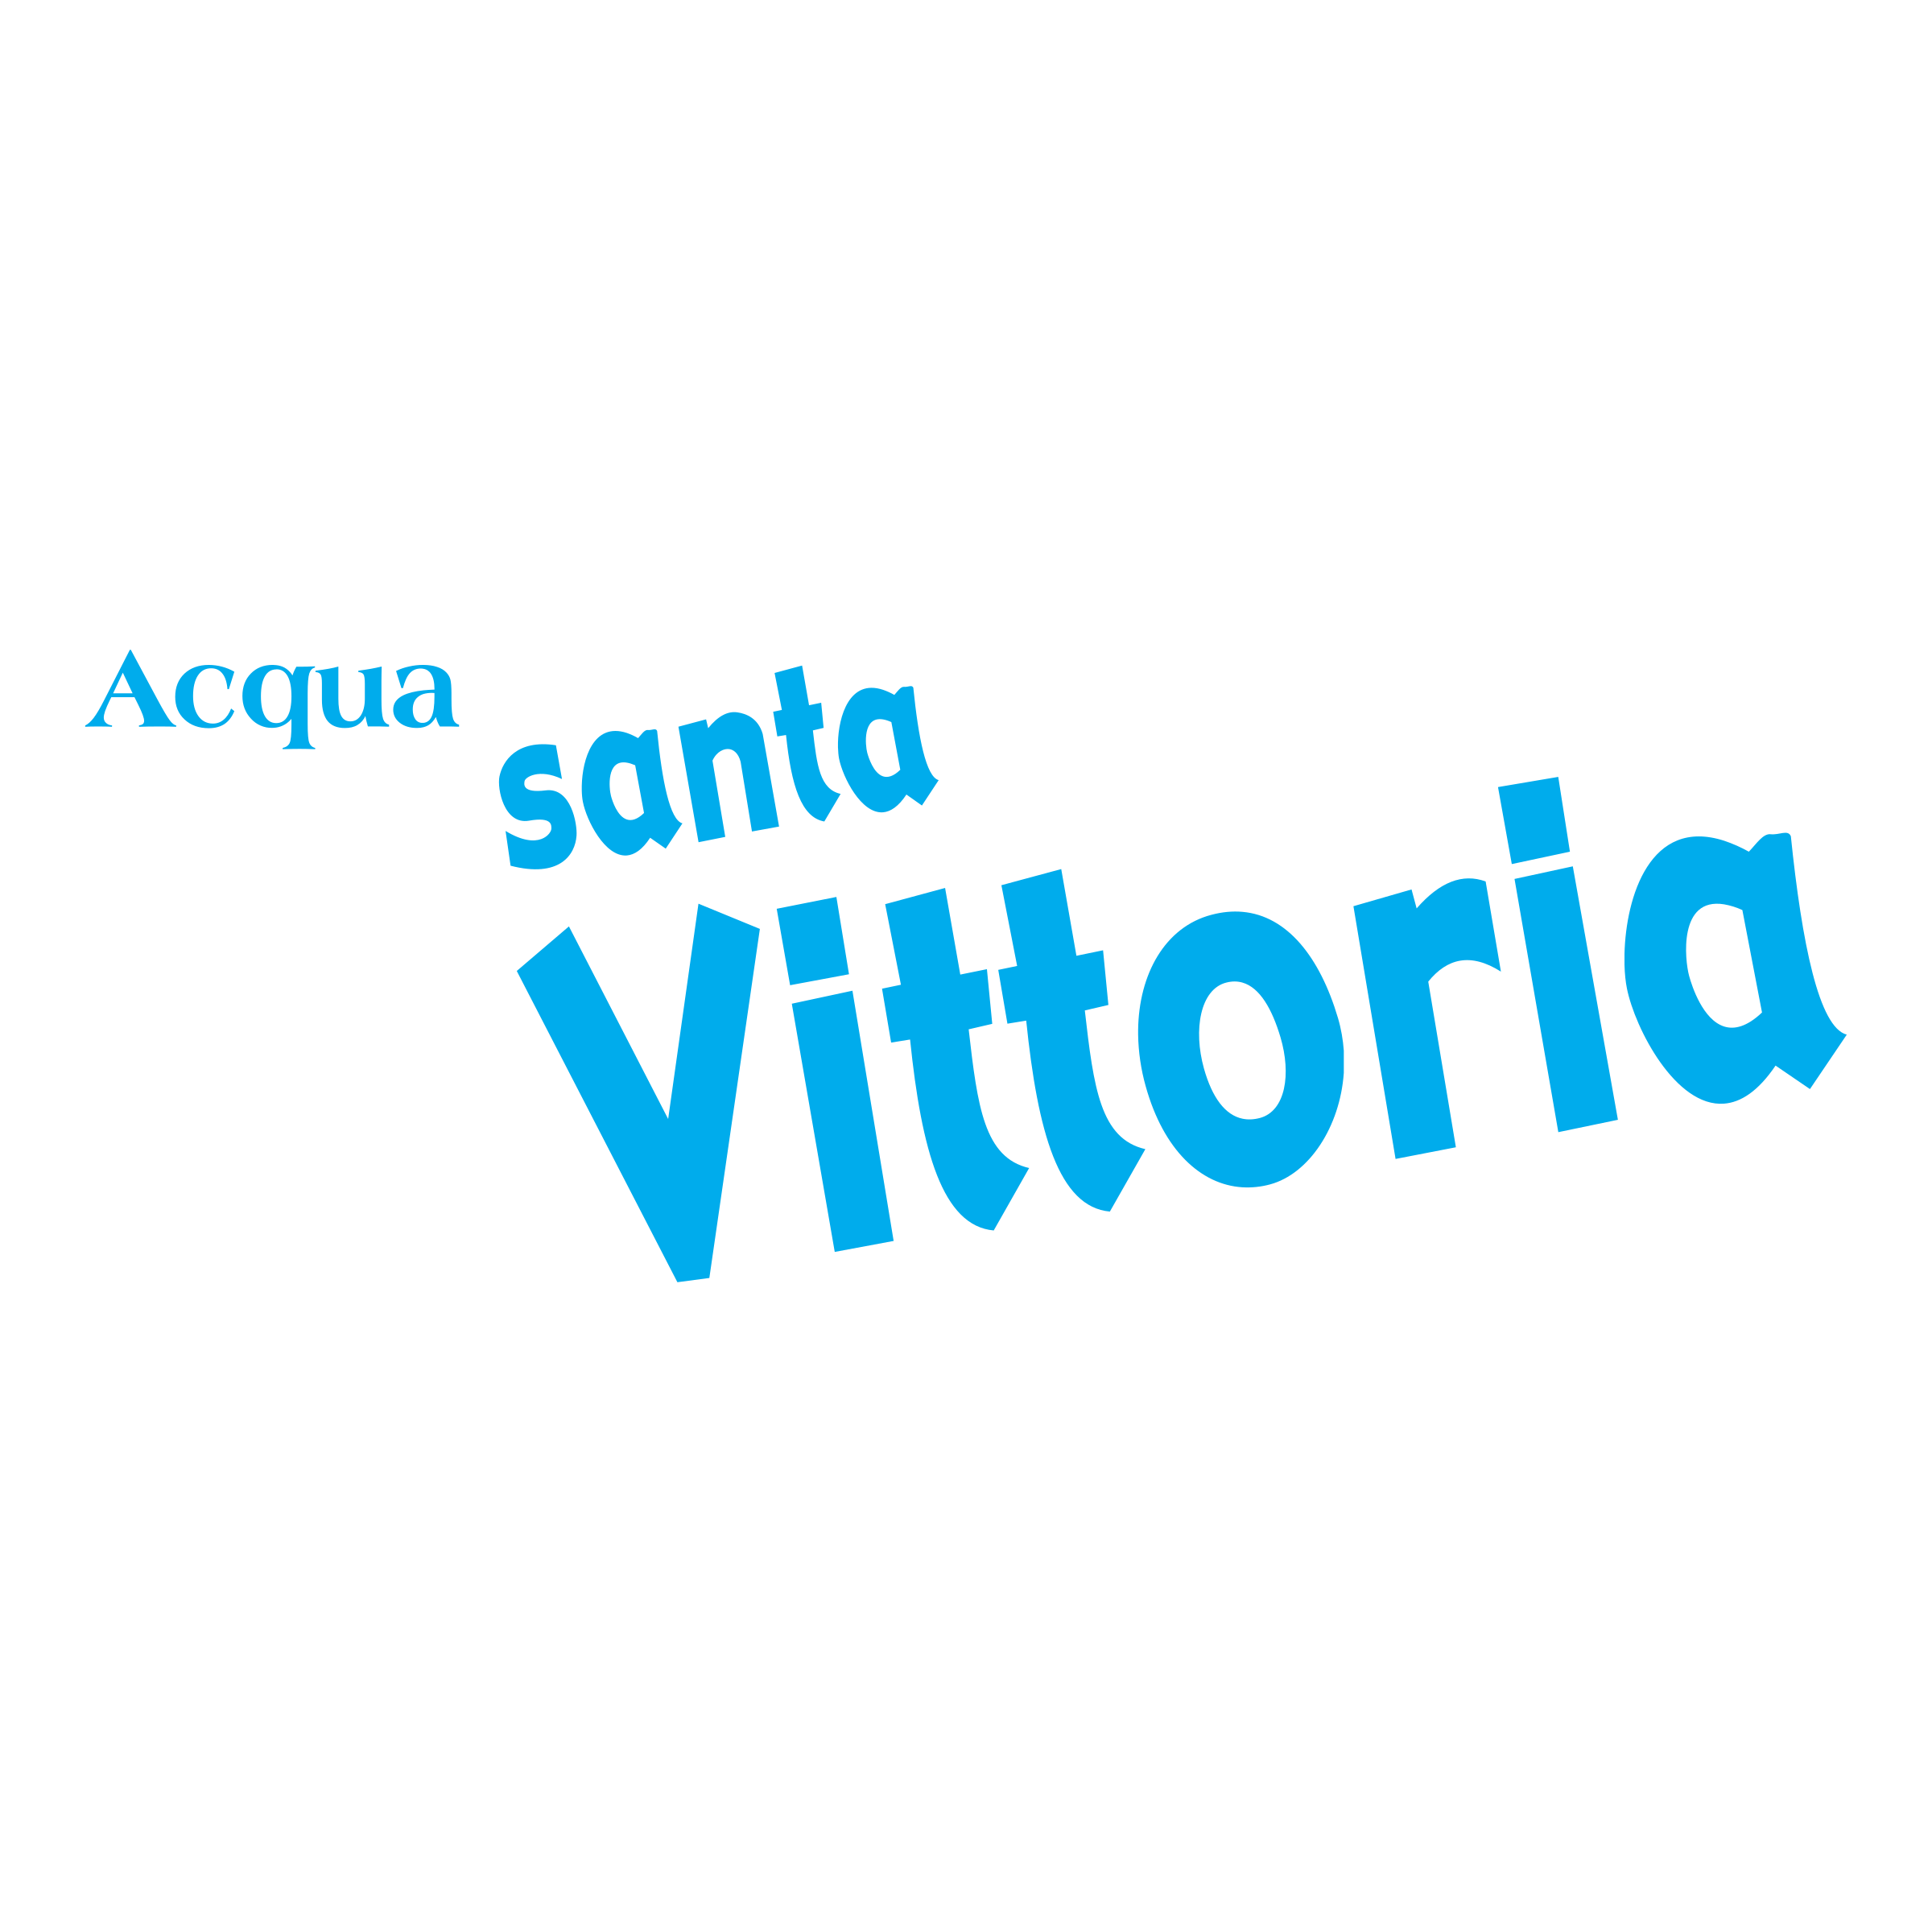 Vittoria Logo - Santa Vittoria Logo PNG Transparent & SVG Vector - Freebie Supply